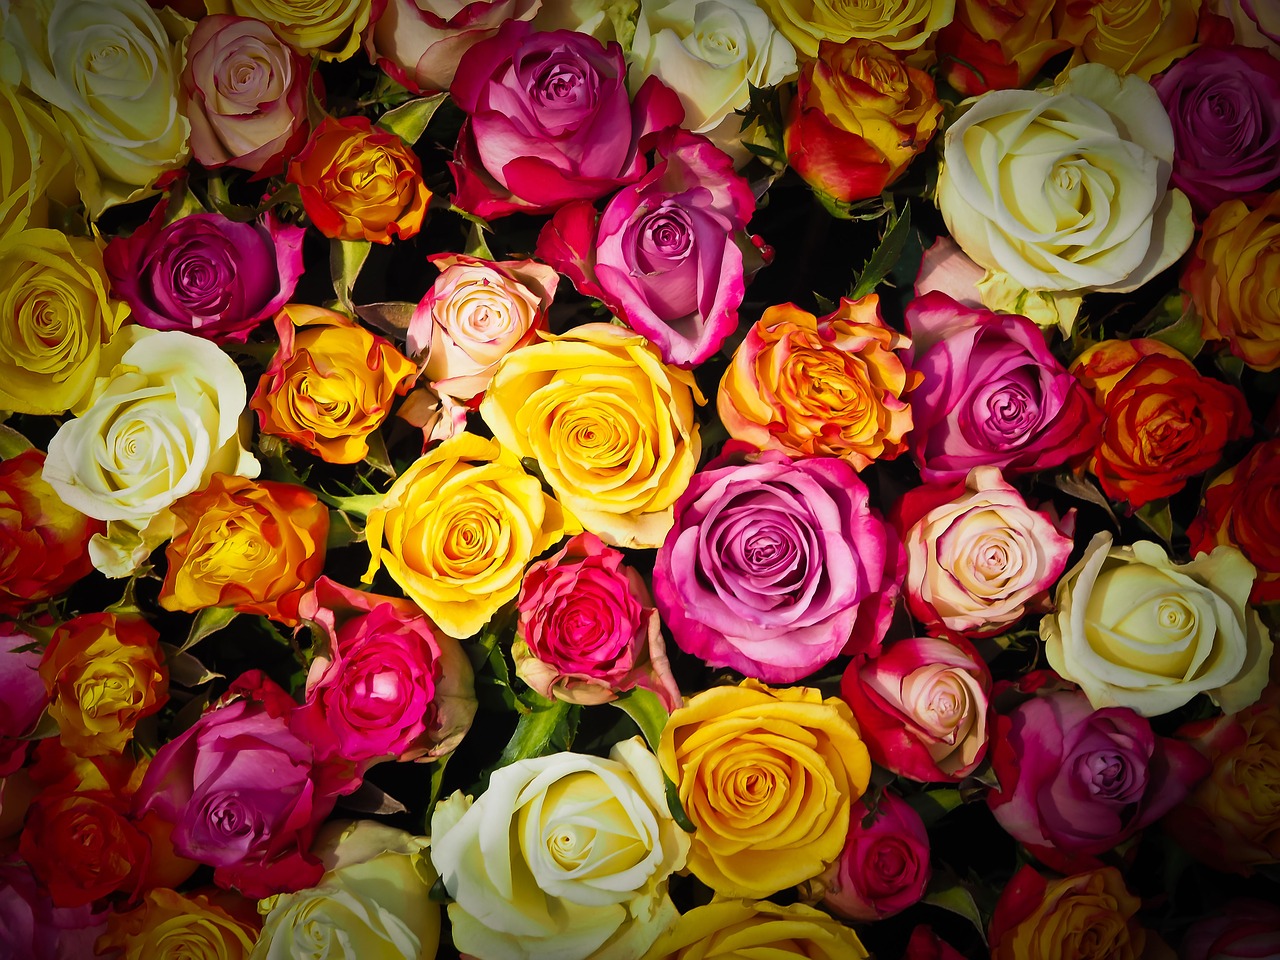 International Online Florist Header Image